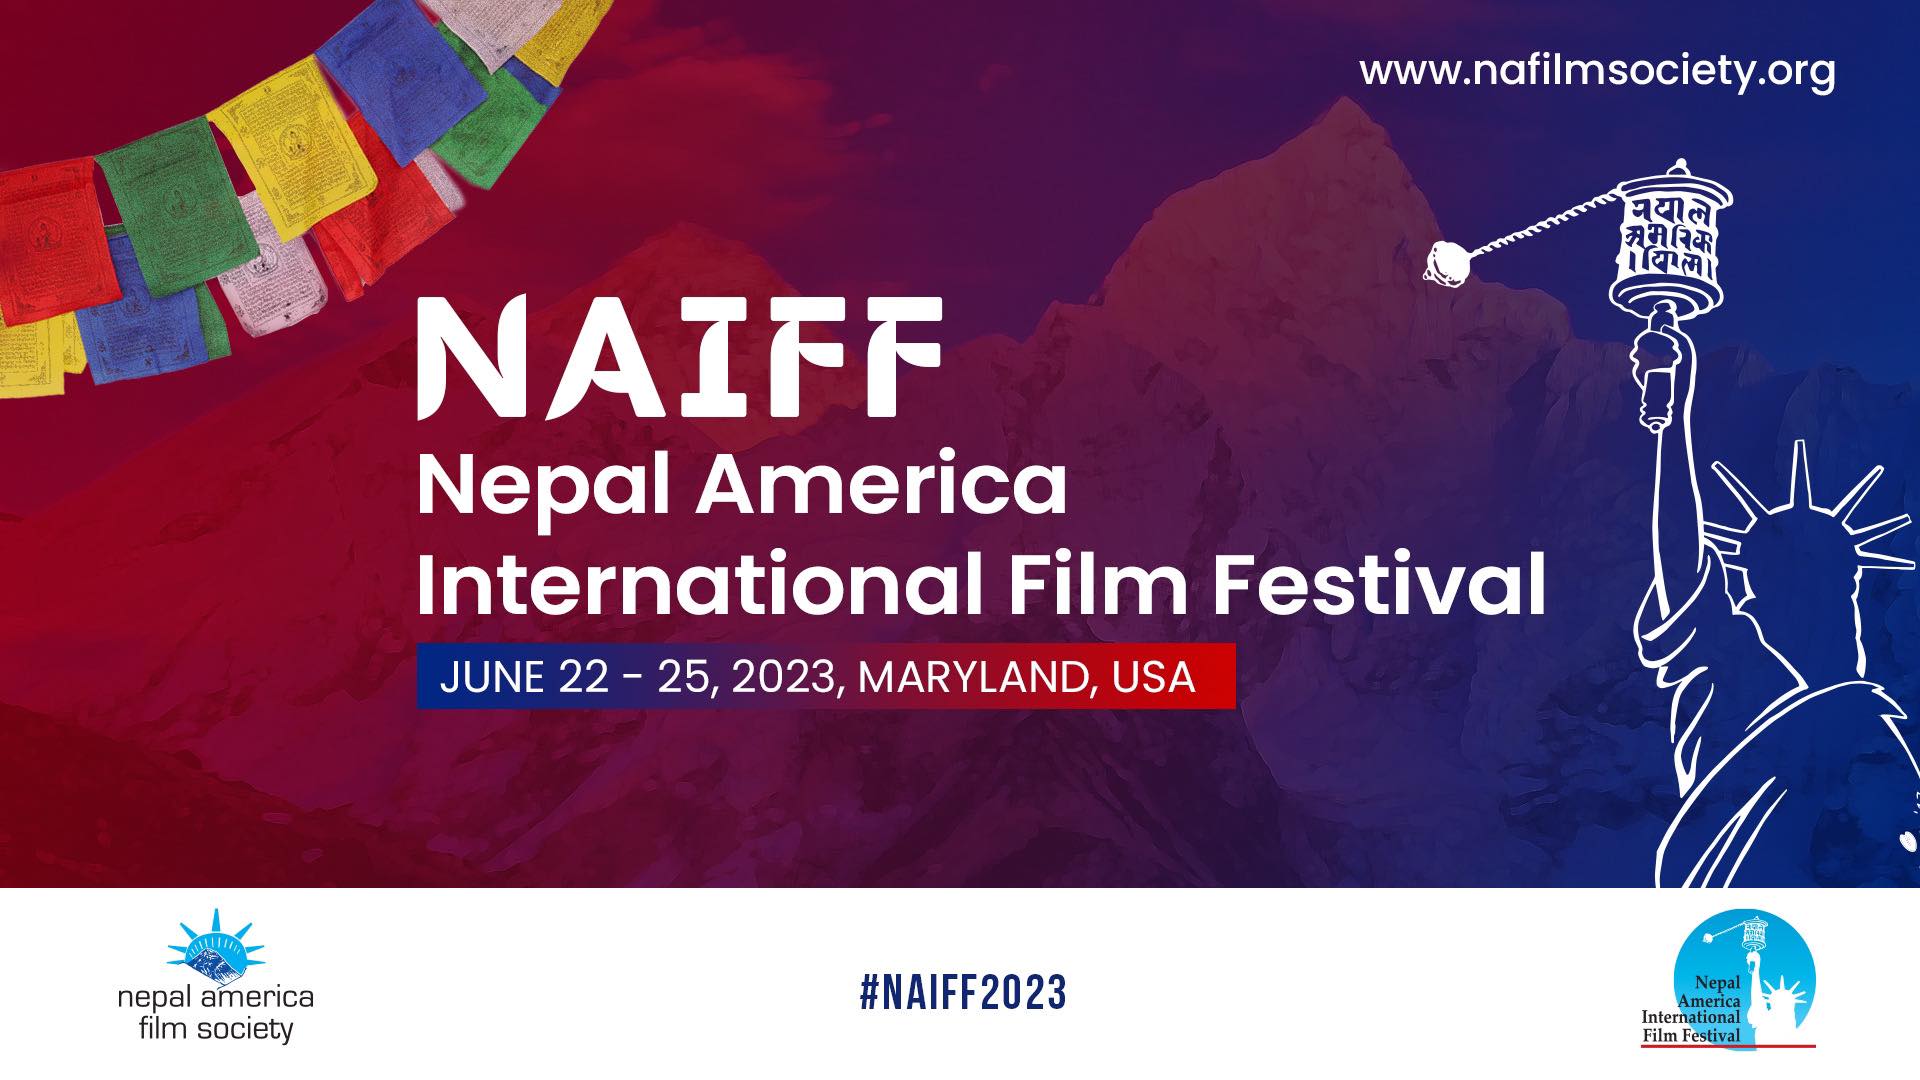 NAIFF festival movies made public